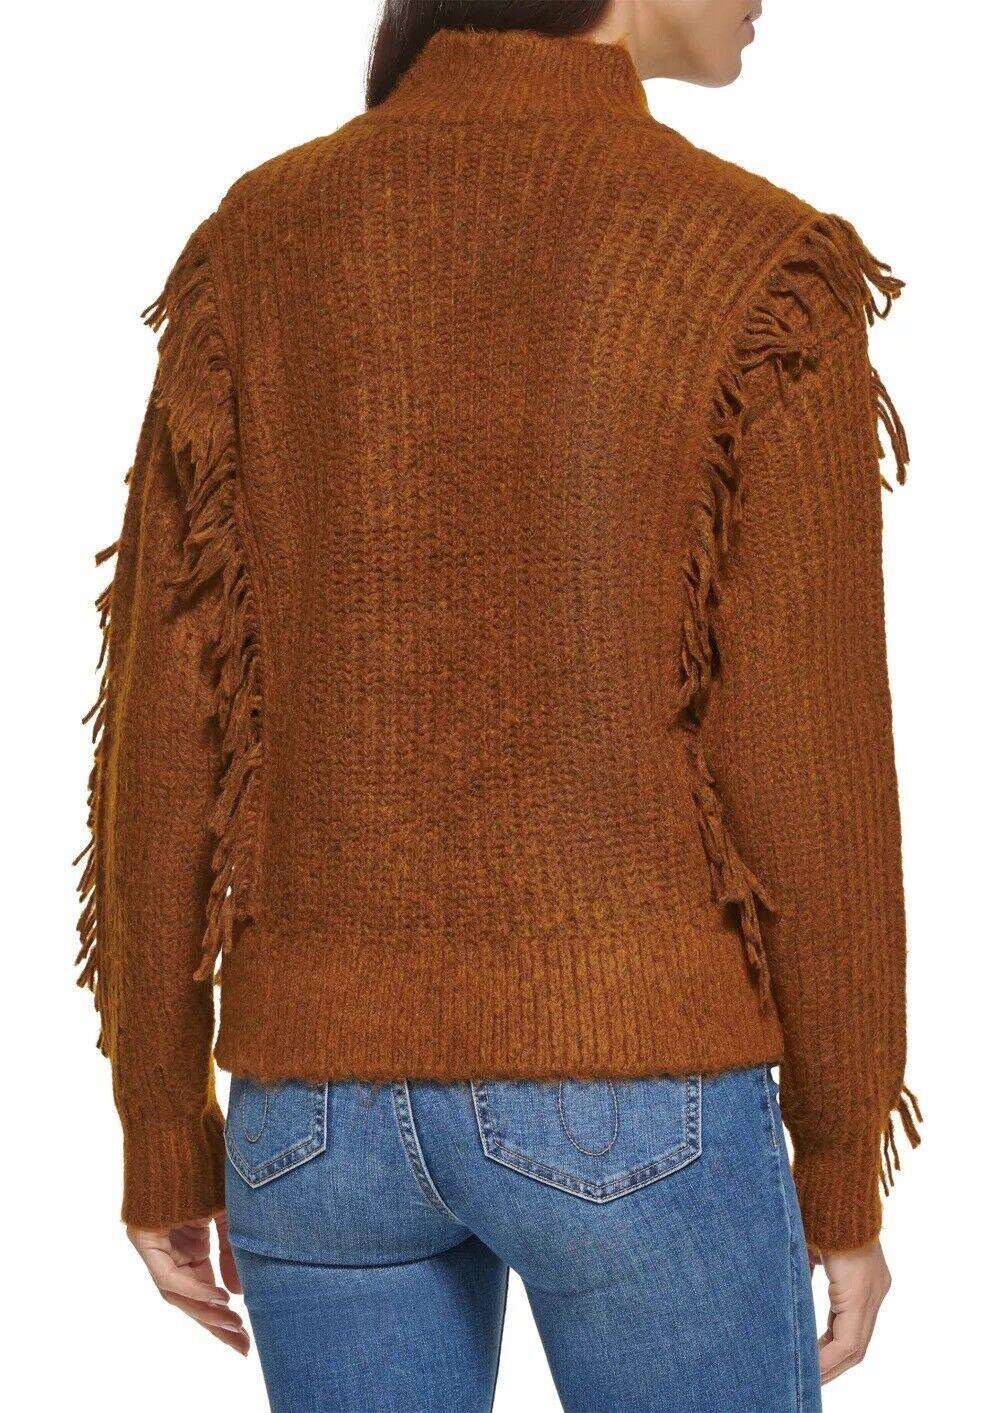 Calvin Klein Women's Knitted Fringe Mock Neck Sweater Brown Size XL - SVNYFancy